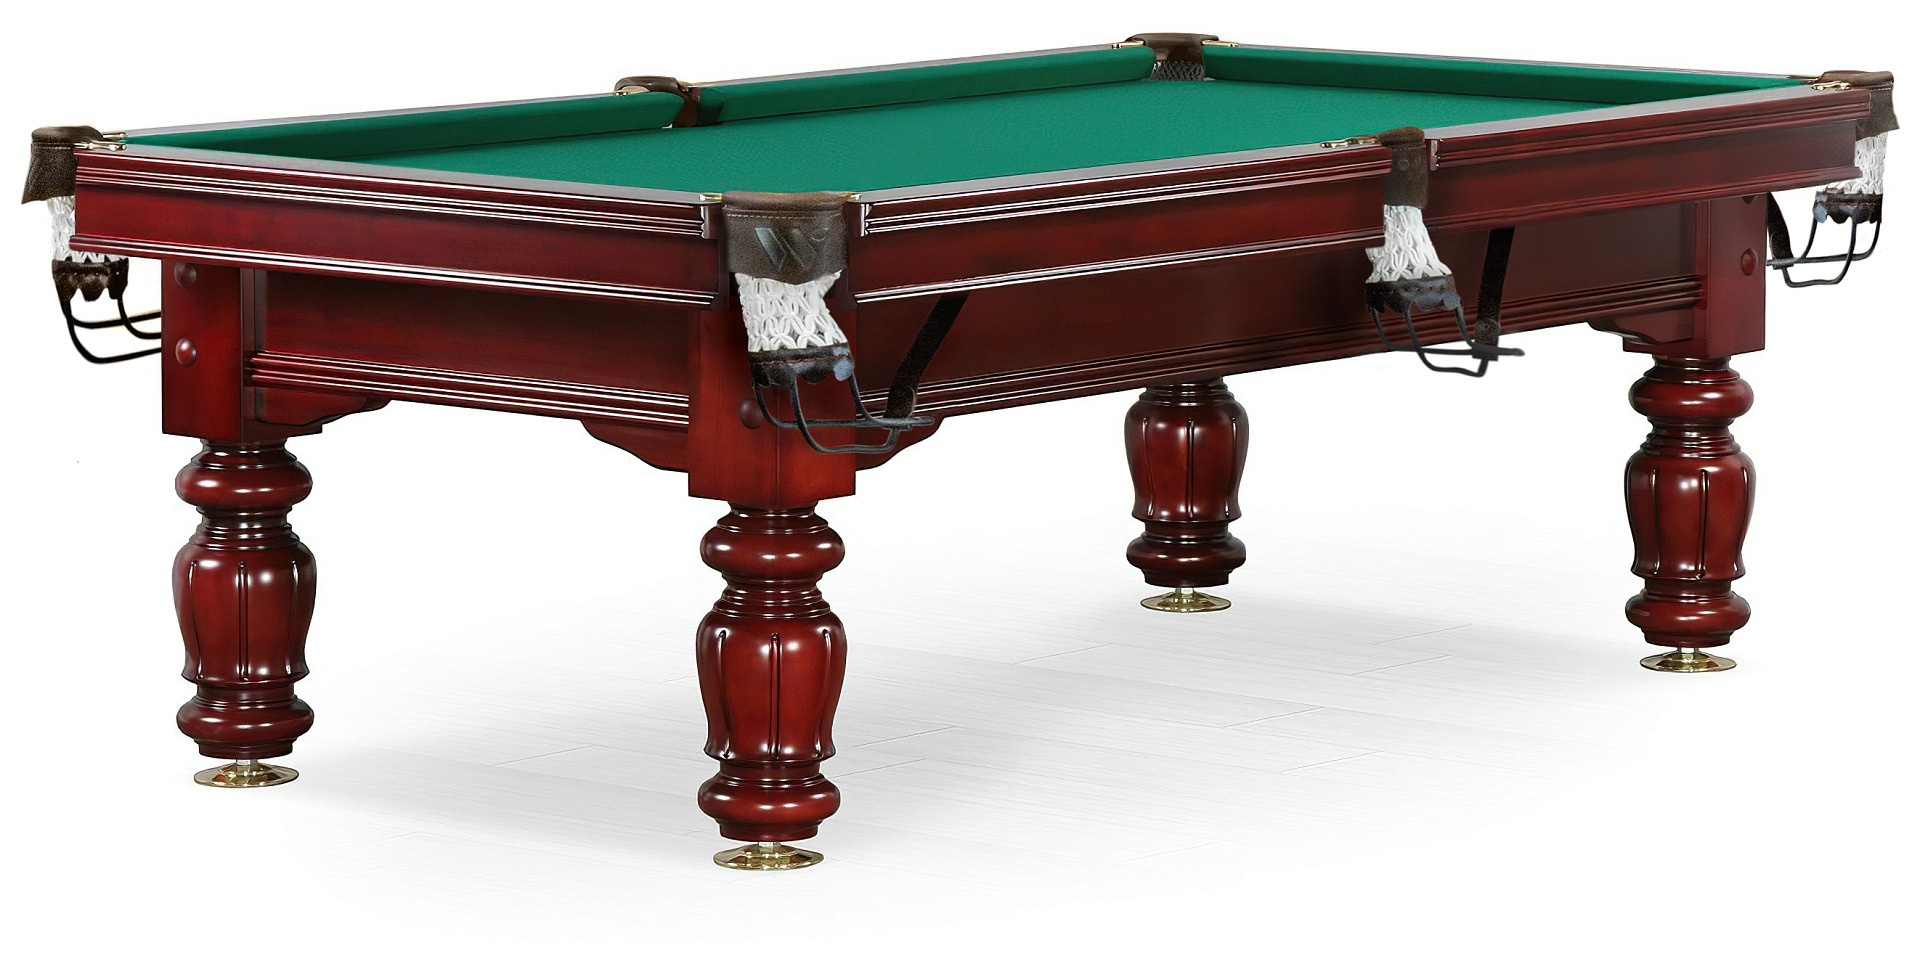 Weekend Billiard Classic II - 8 футов (махагон) из каталога бильярдных столов в Санкт-Петербурге по цене 148500 ₽